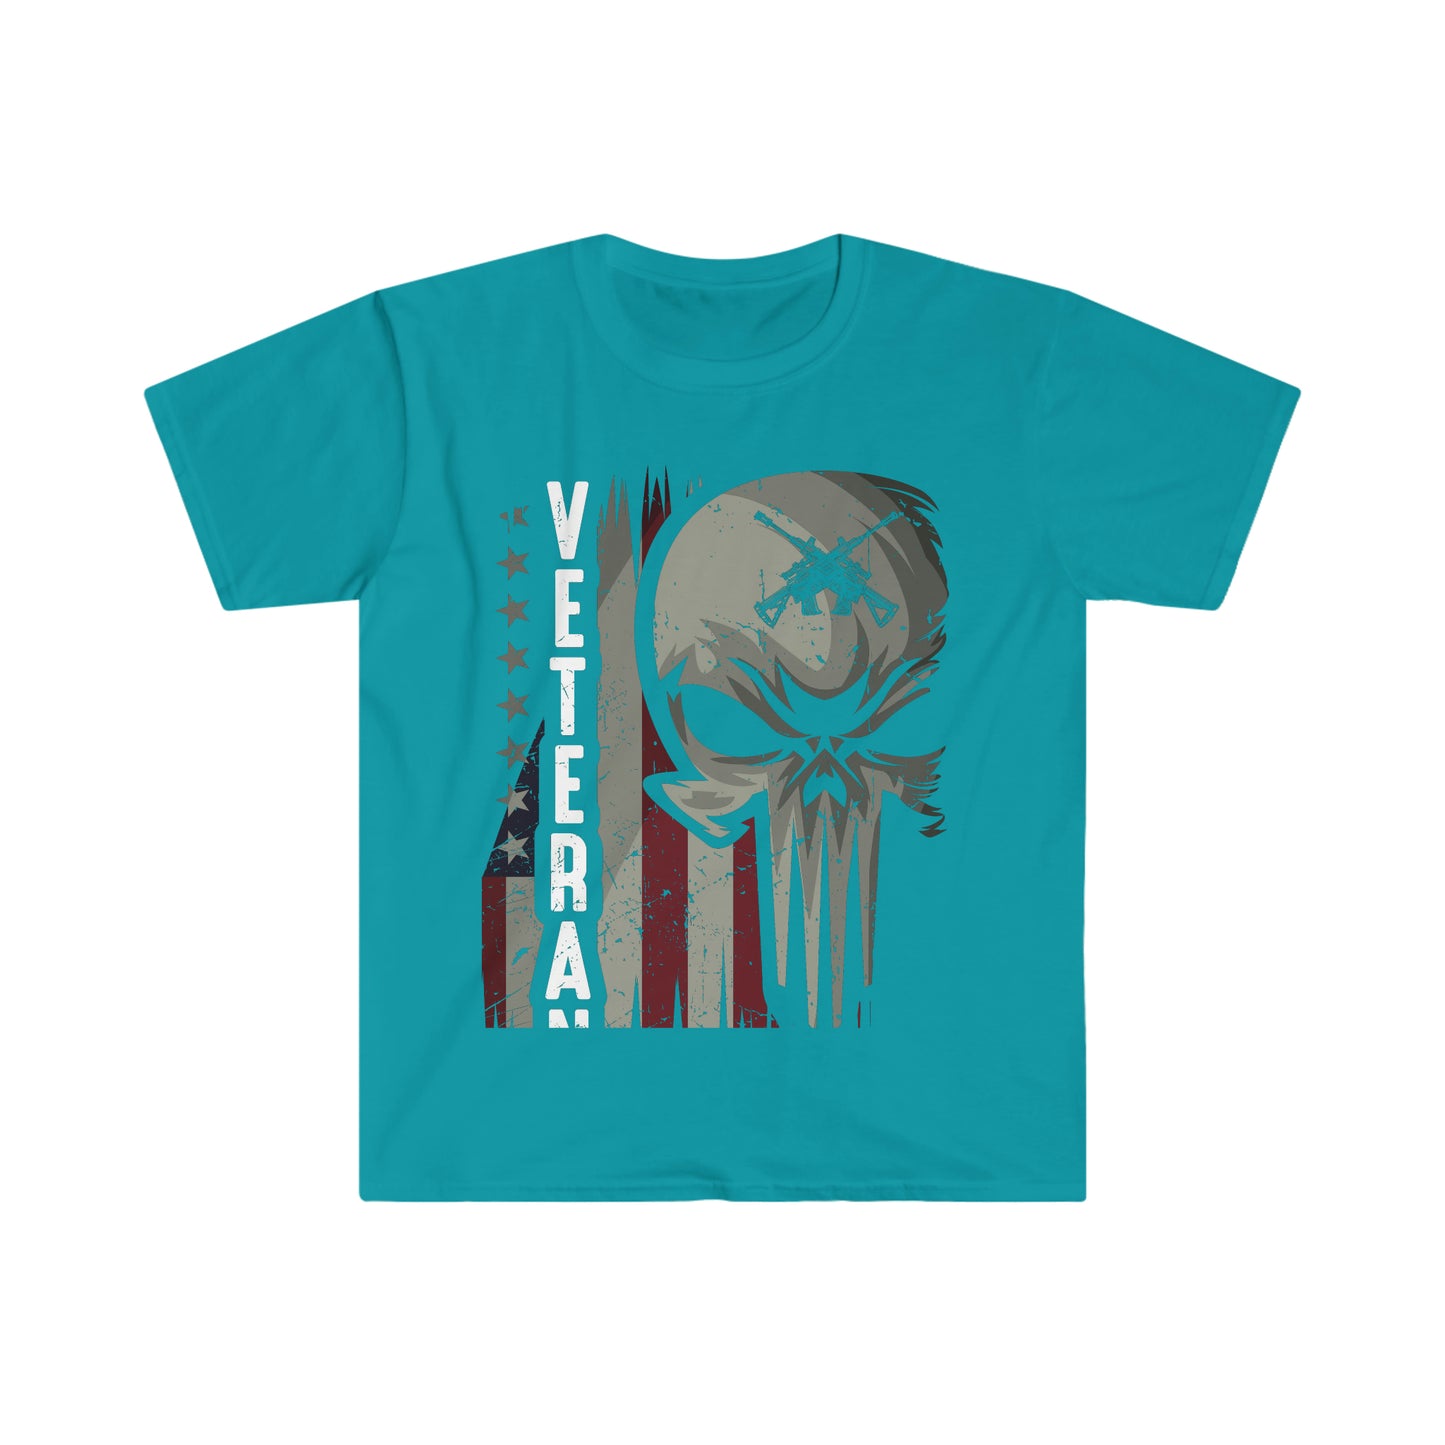 Unisex Softstyle T-Shirt Patriot Collection "veteran skull" multiple dark